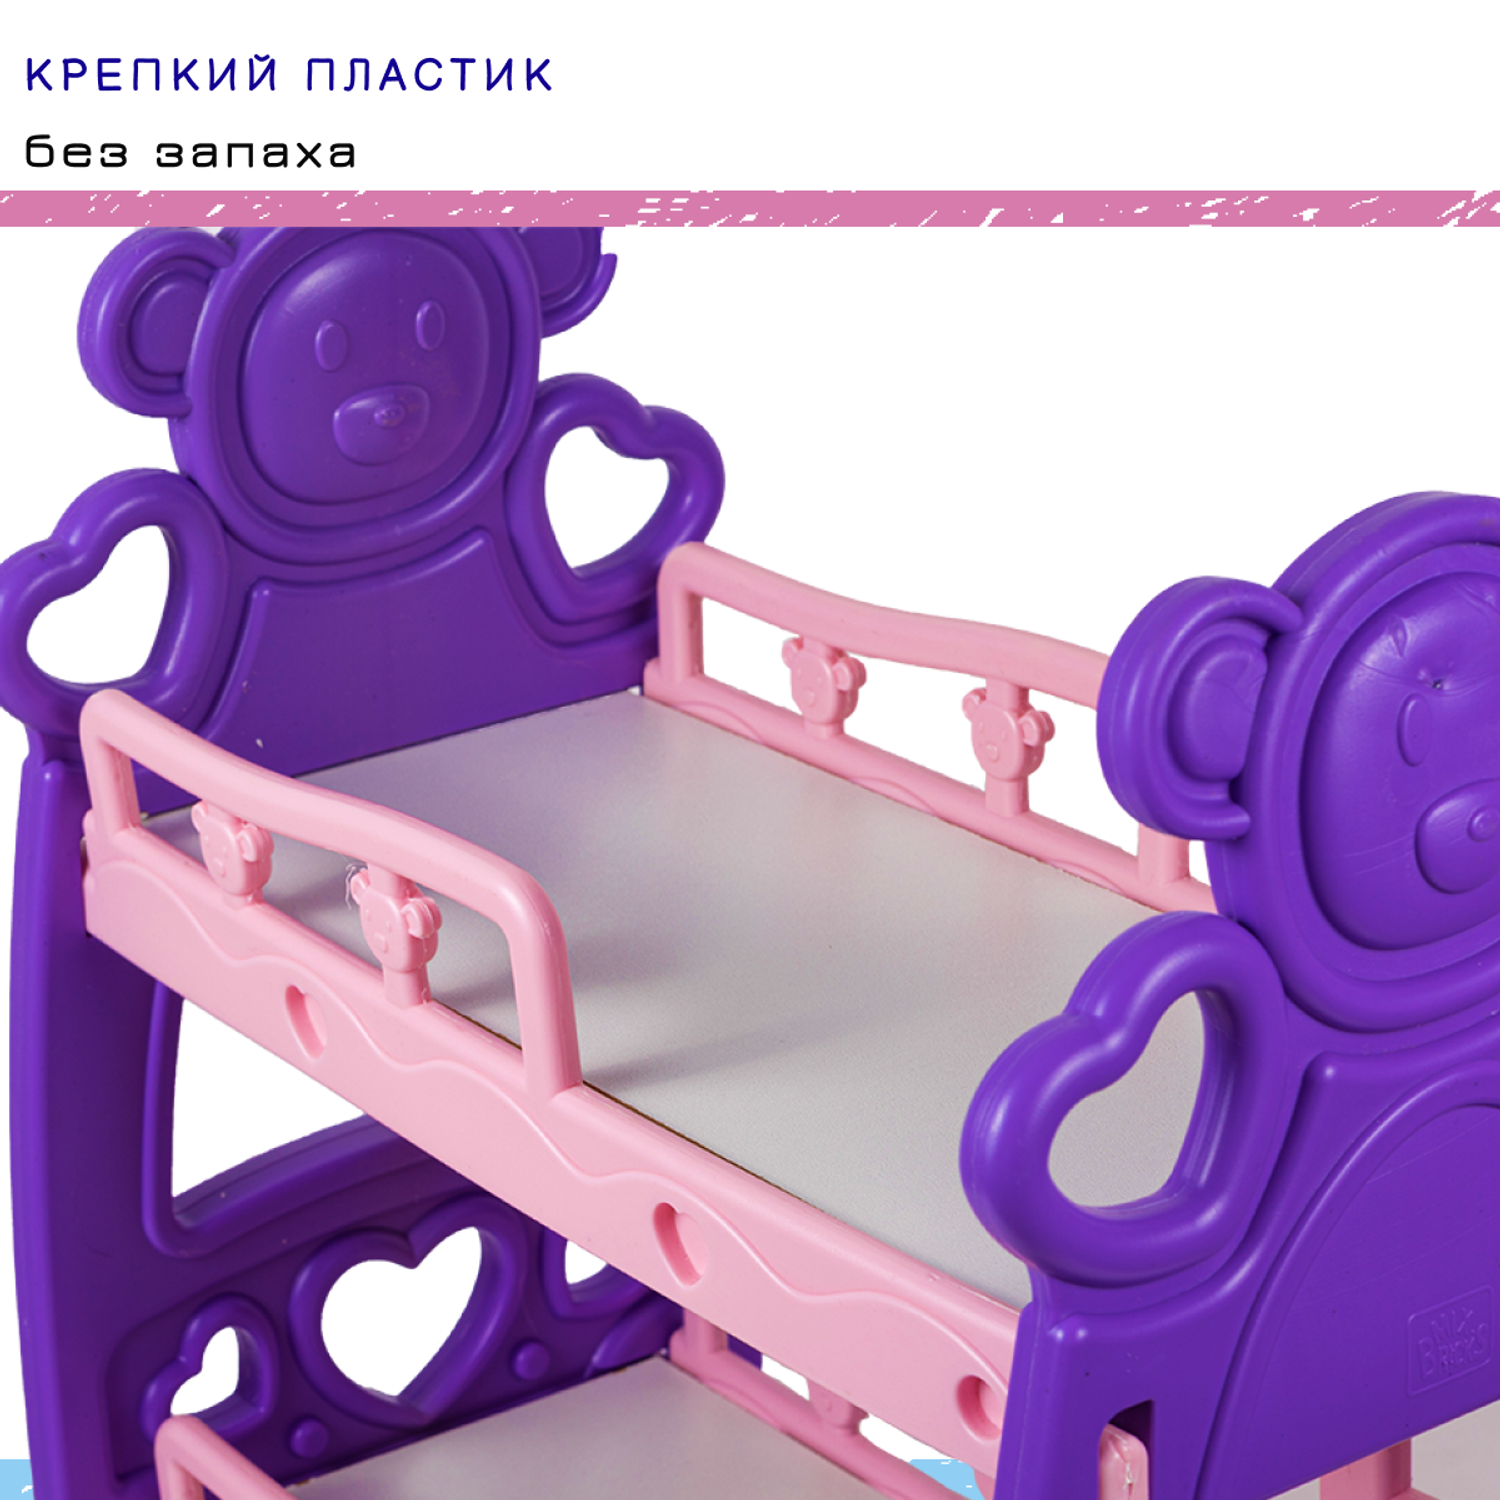 Кроватка для куклы TOY MIX двухъярусная розовый РР 2015-059 РР 2015-059 - фото 4